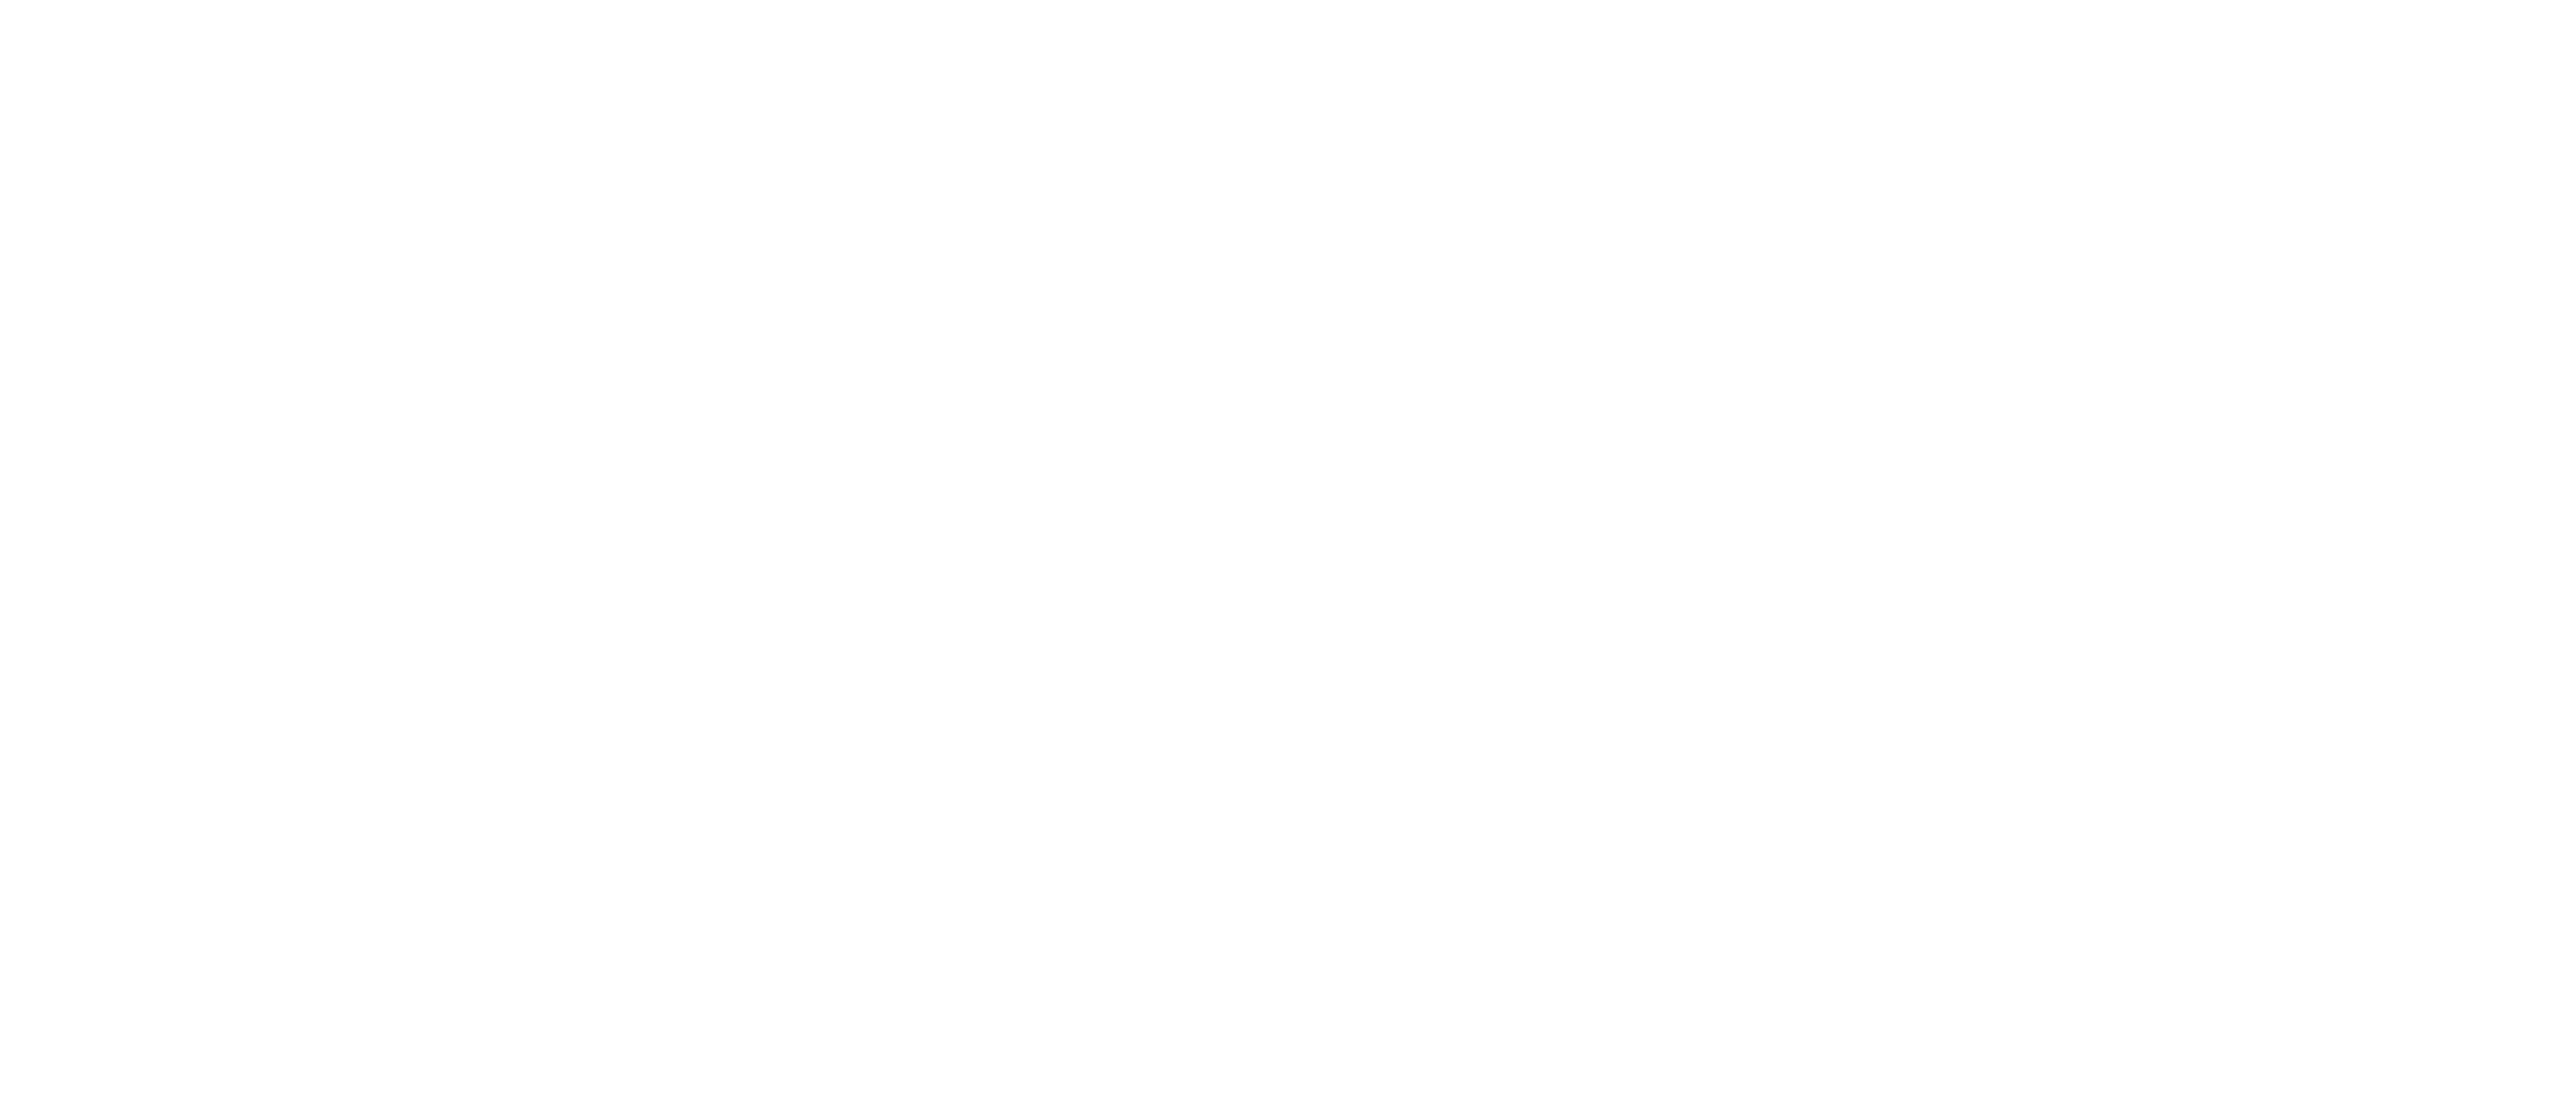 The Fashion Carts